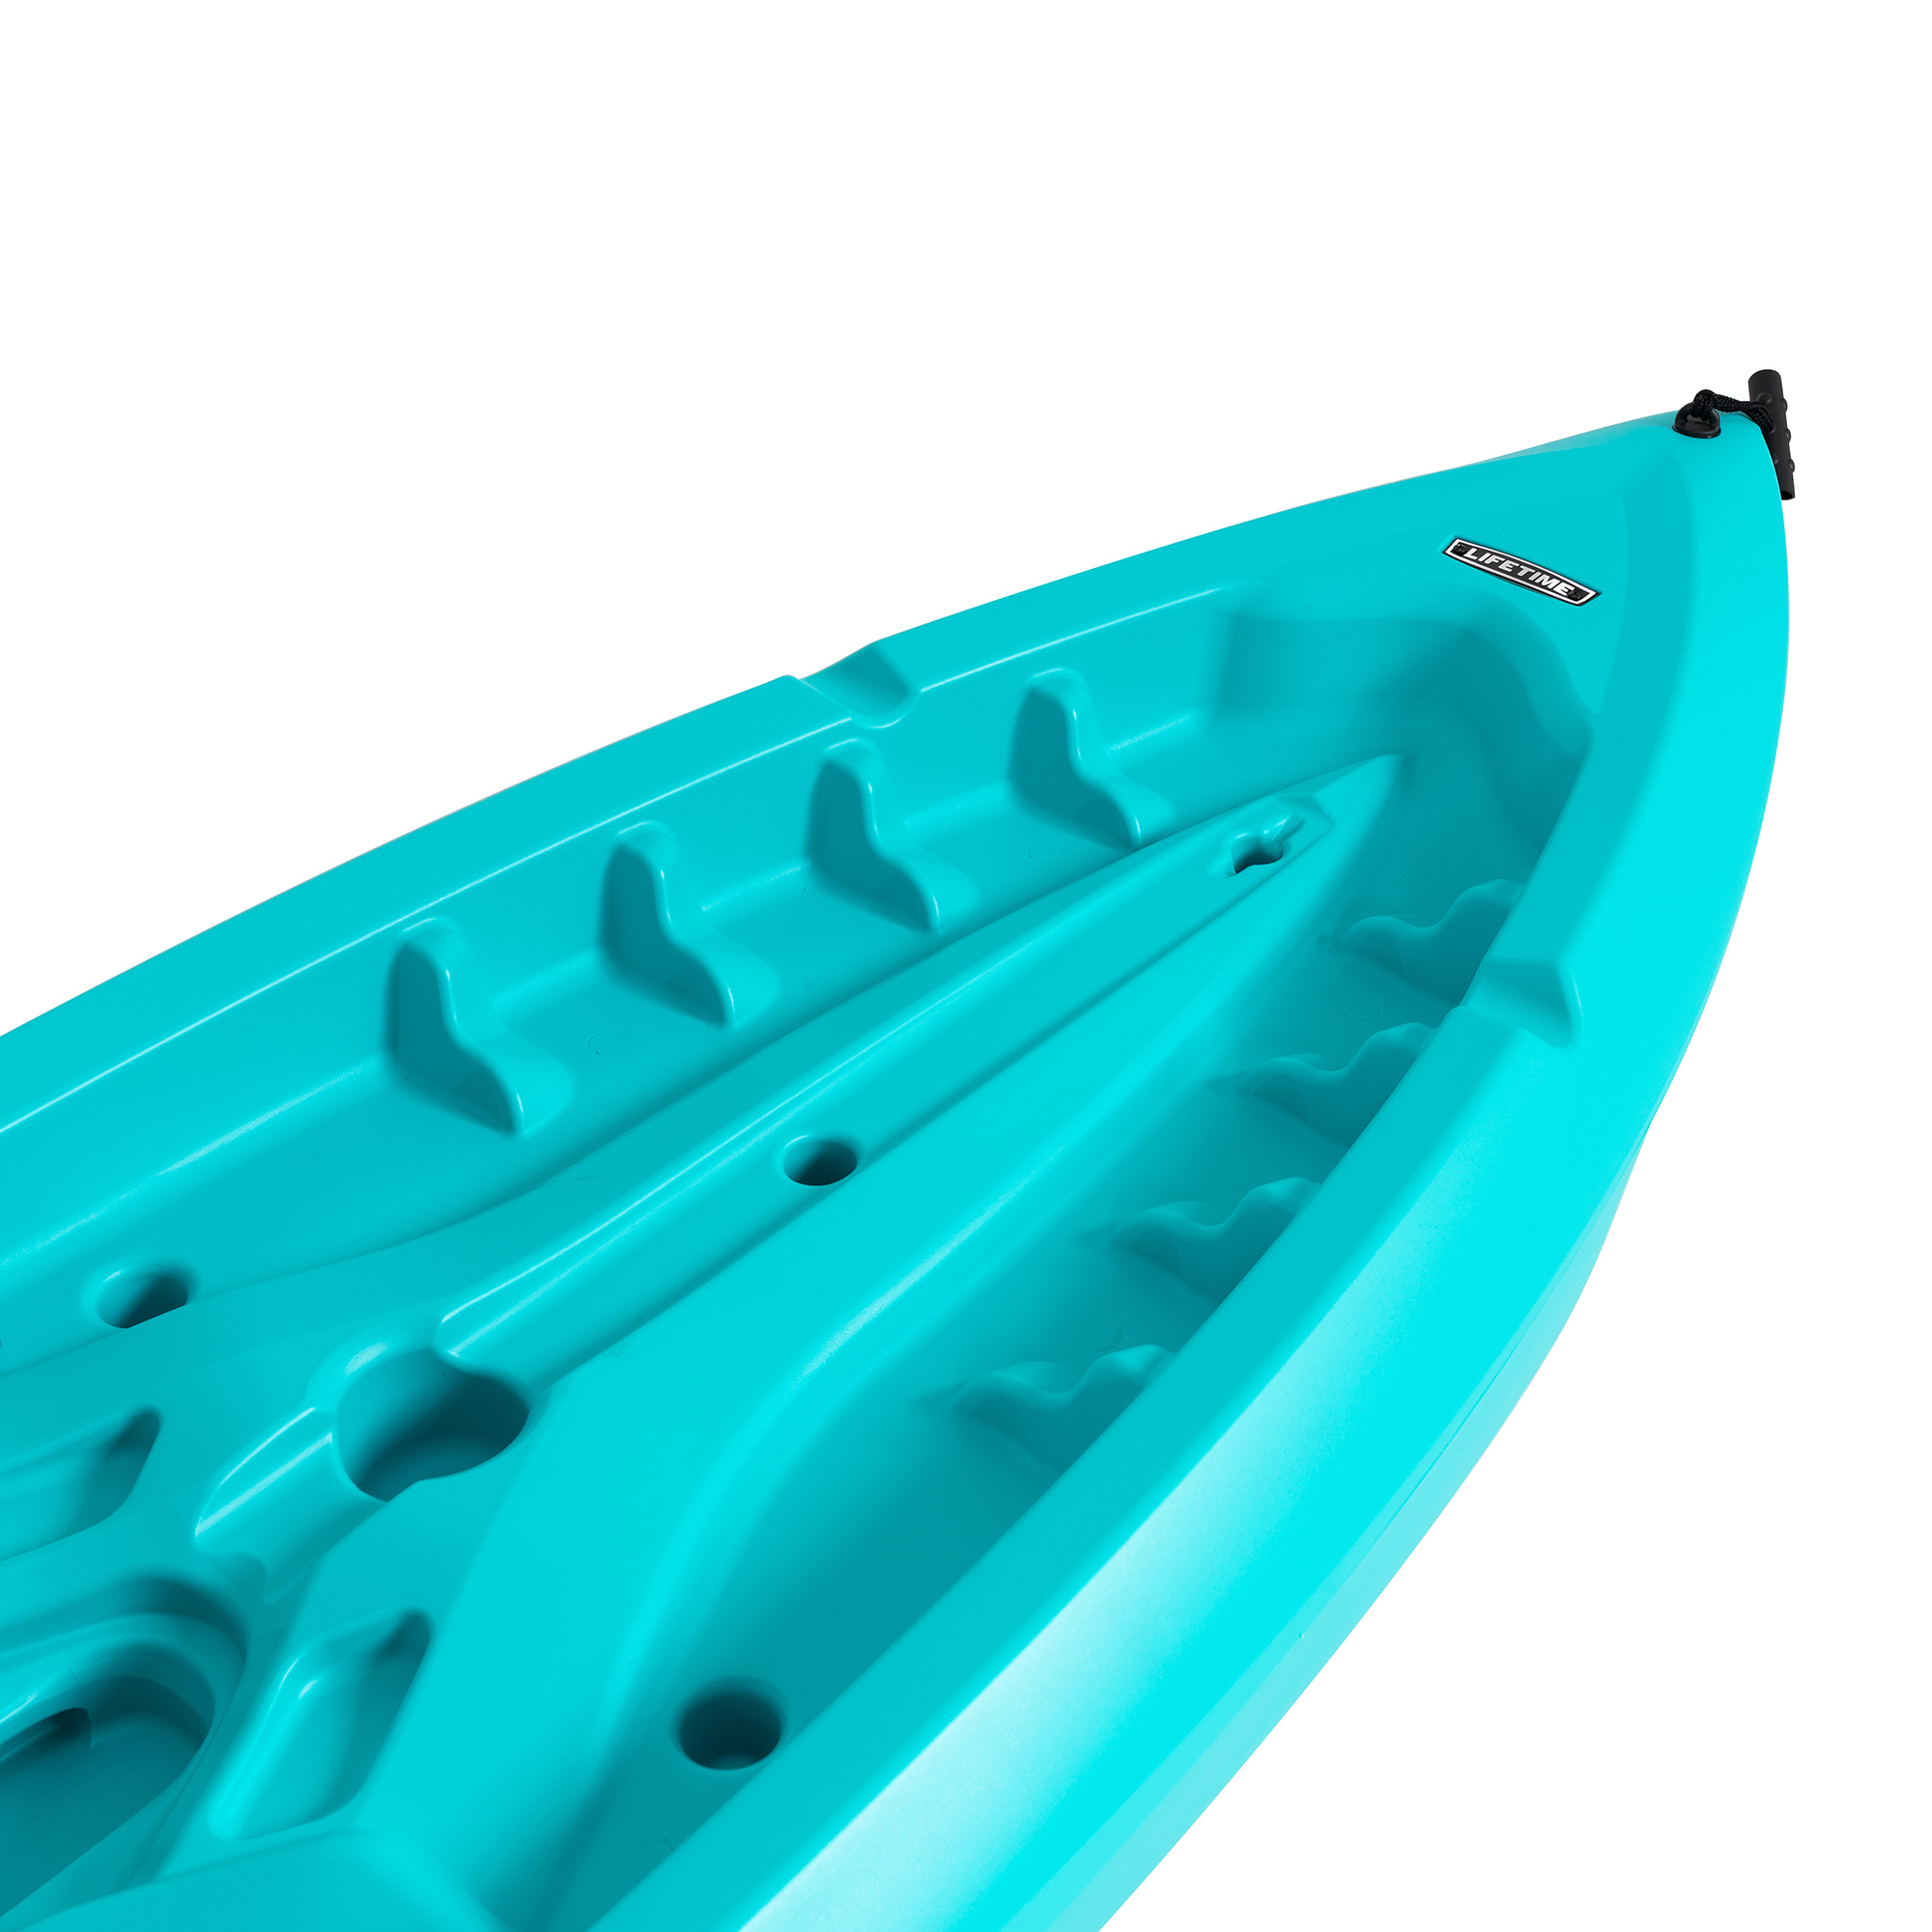 Lifetime Daylite 8 ft Sit-on-Top Kayak, Teal (90811) - image 8 of 30